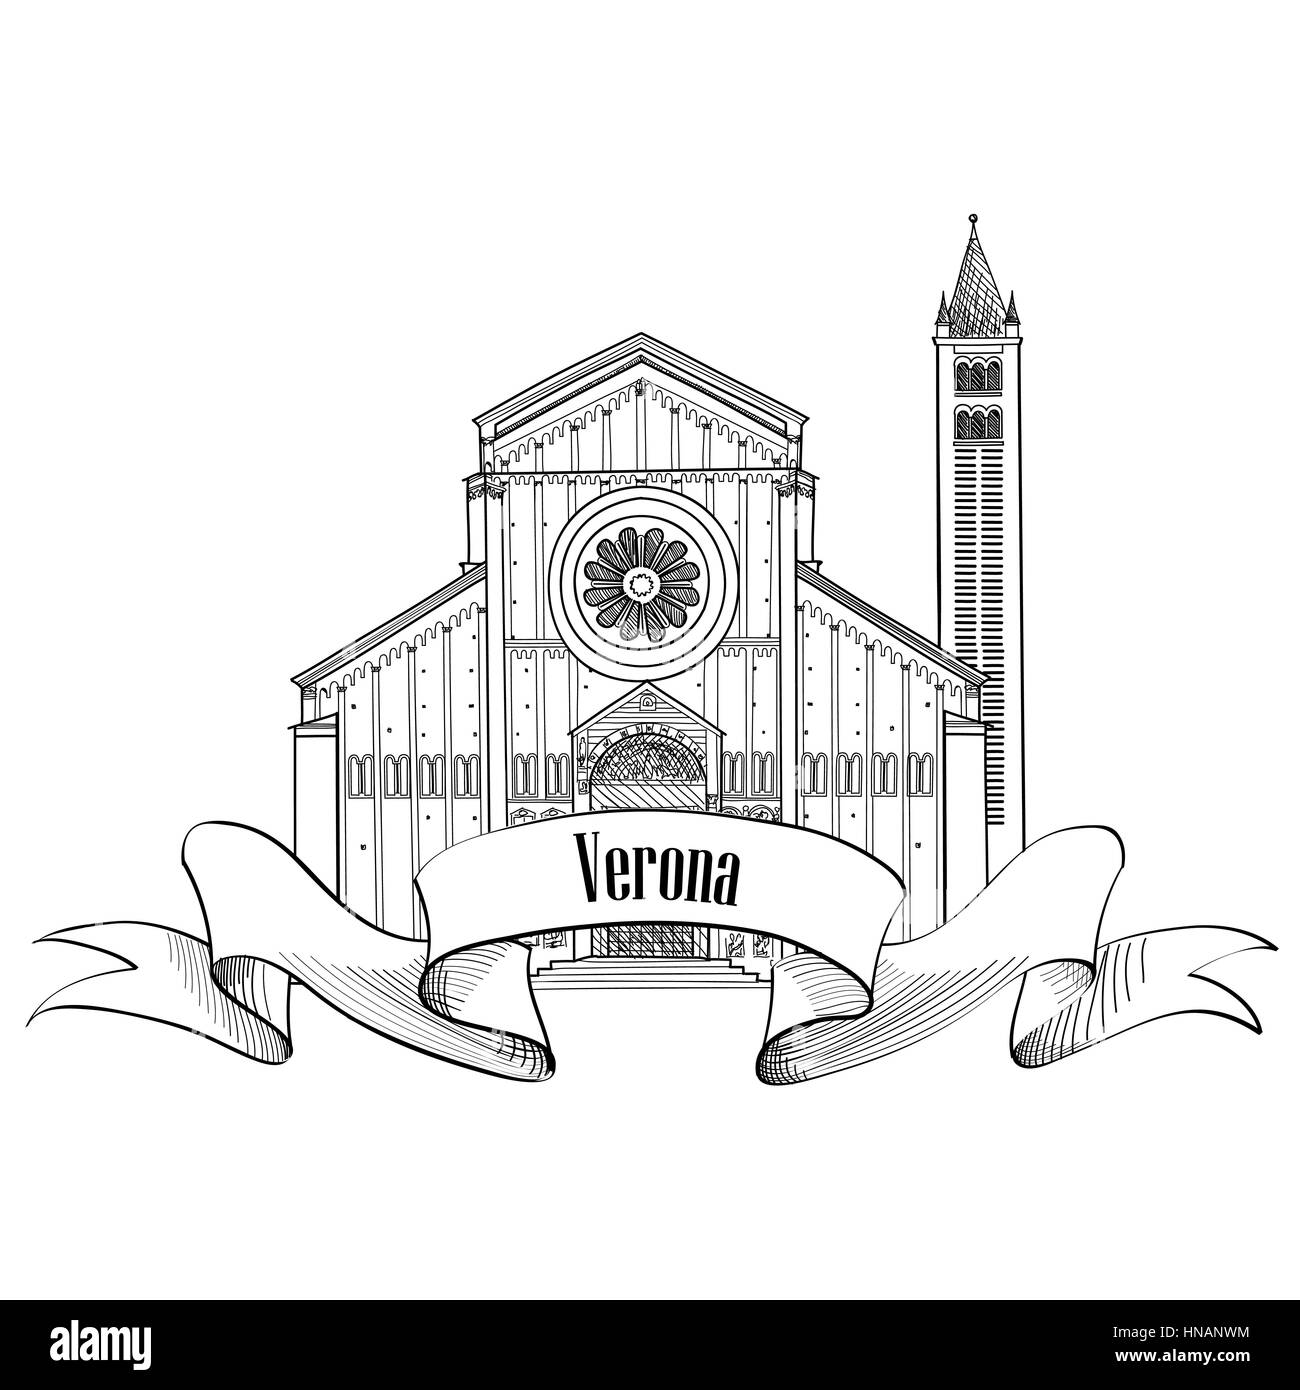 Verona City label. Reisen Italien Symbol. berühmten italienischen Gebäude Kirche von San Zeno Skizze. sightseeing Symbol. Stock Vektor